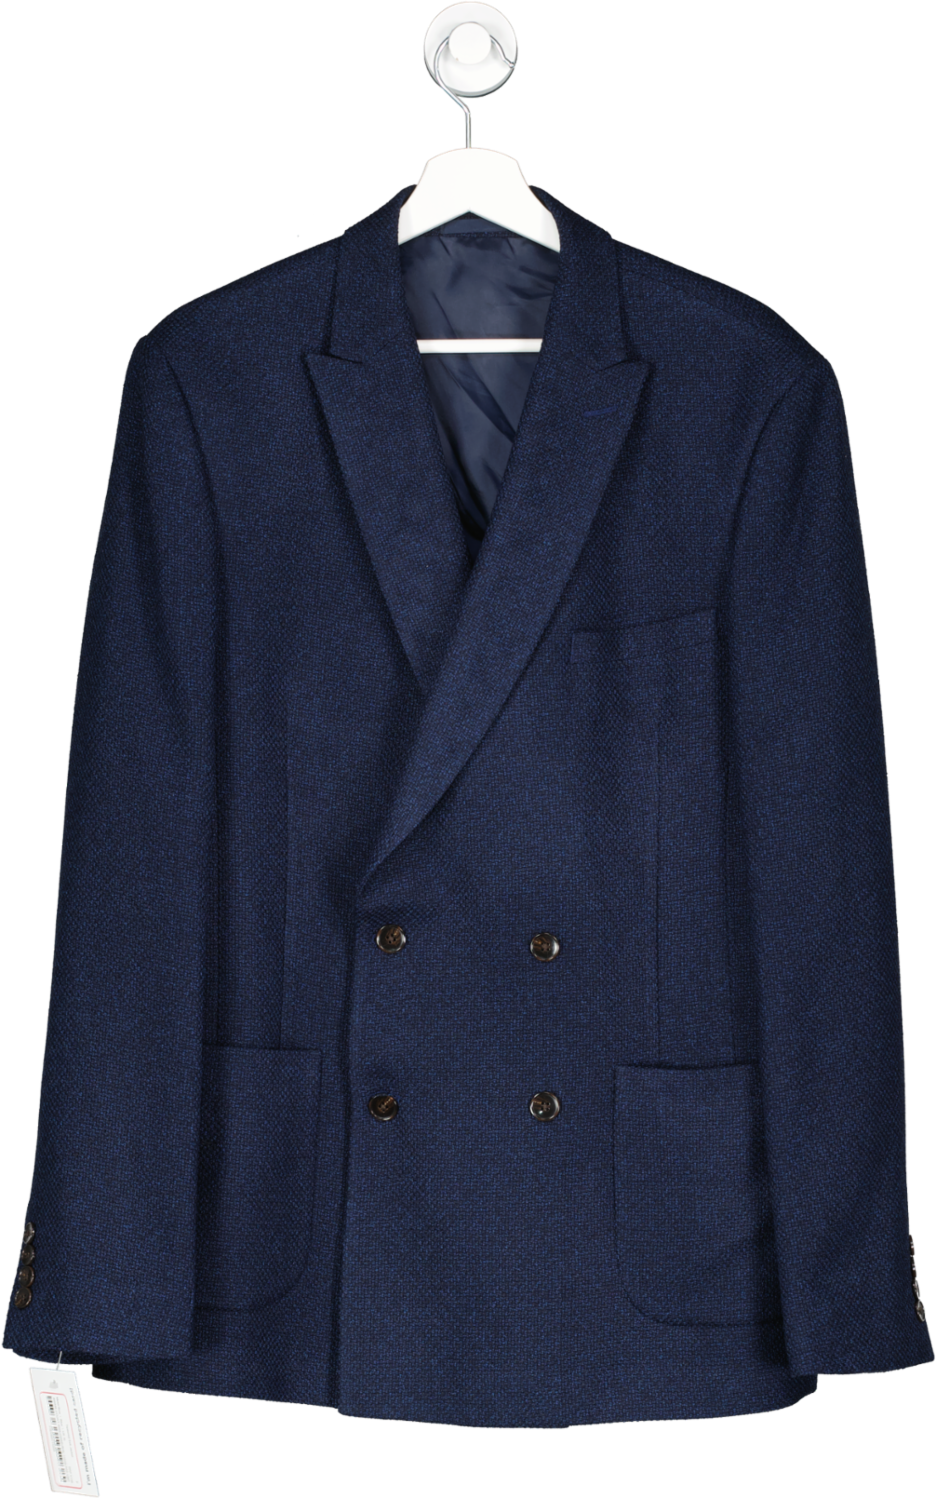 Louis Vuitton Sport Coats & Blazers for Men - Poshmark